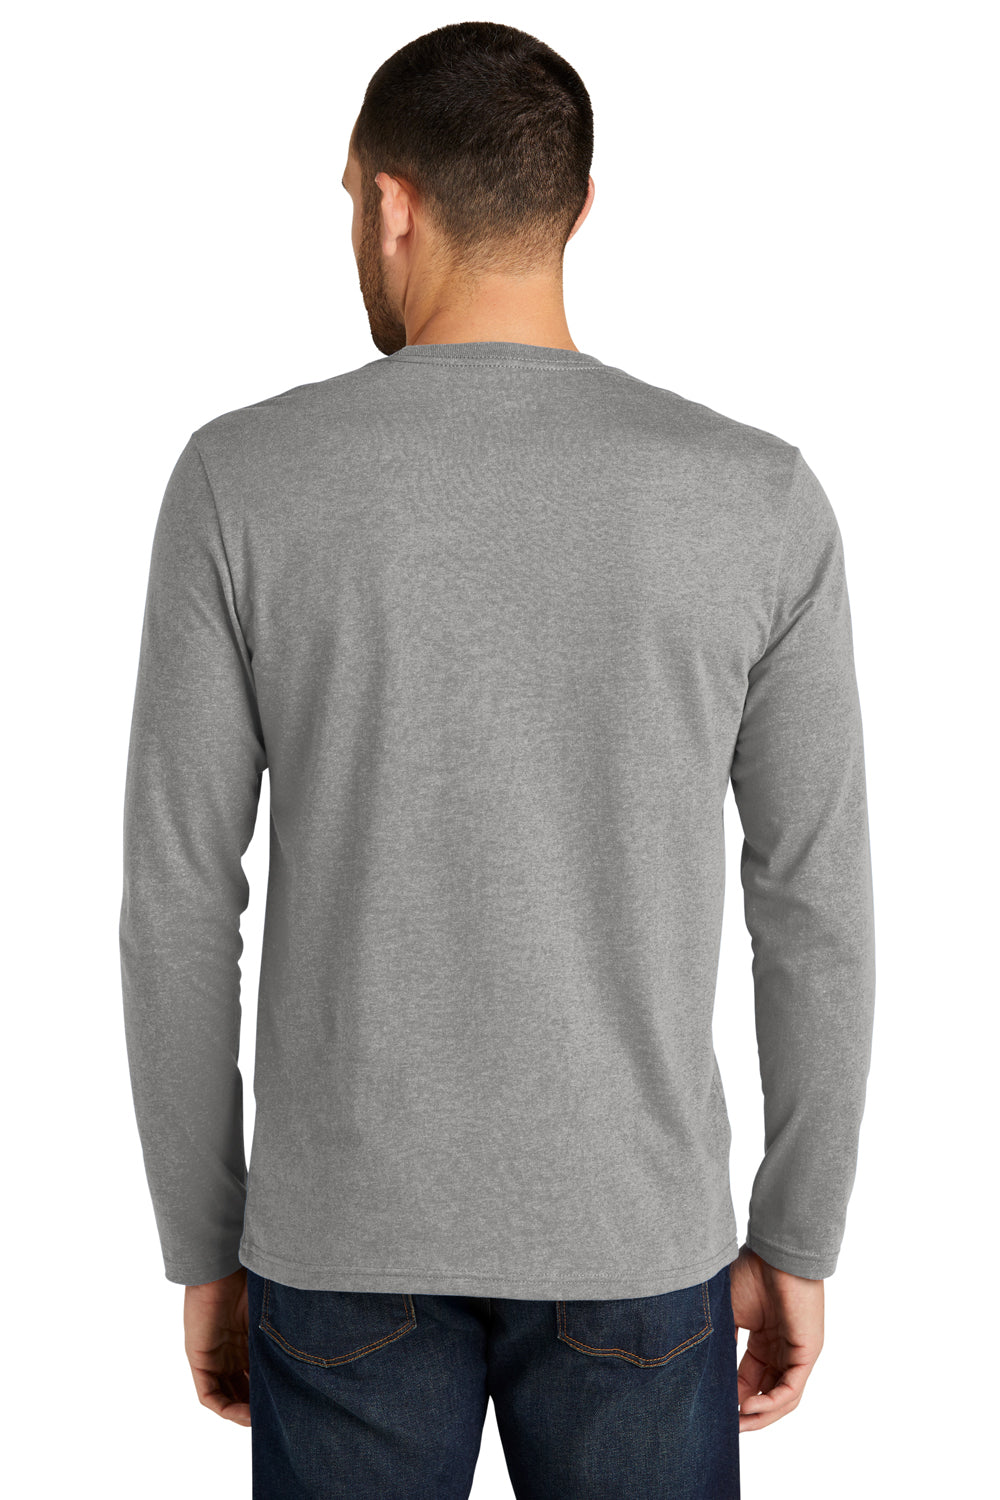 District DT8003 Re-Tee Long Sleeve Crewneck T-Shirt Heather Light Grey Back